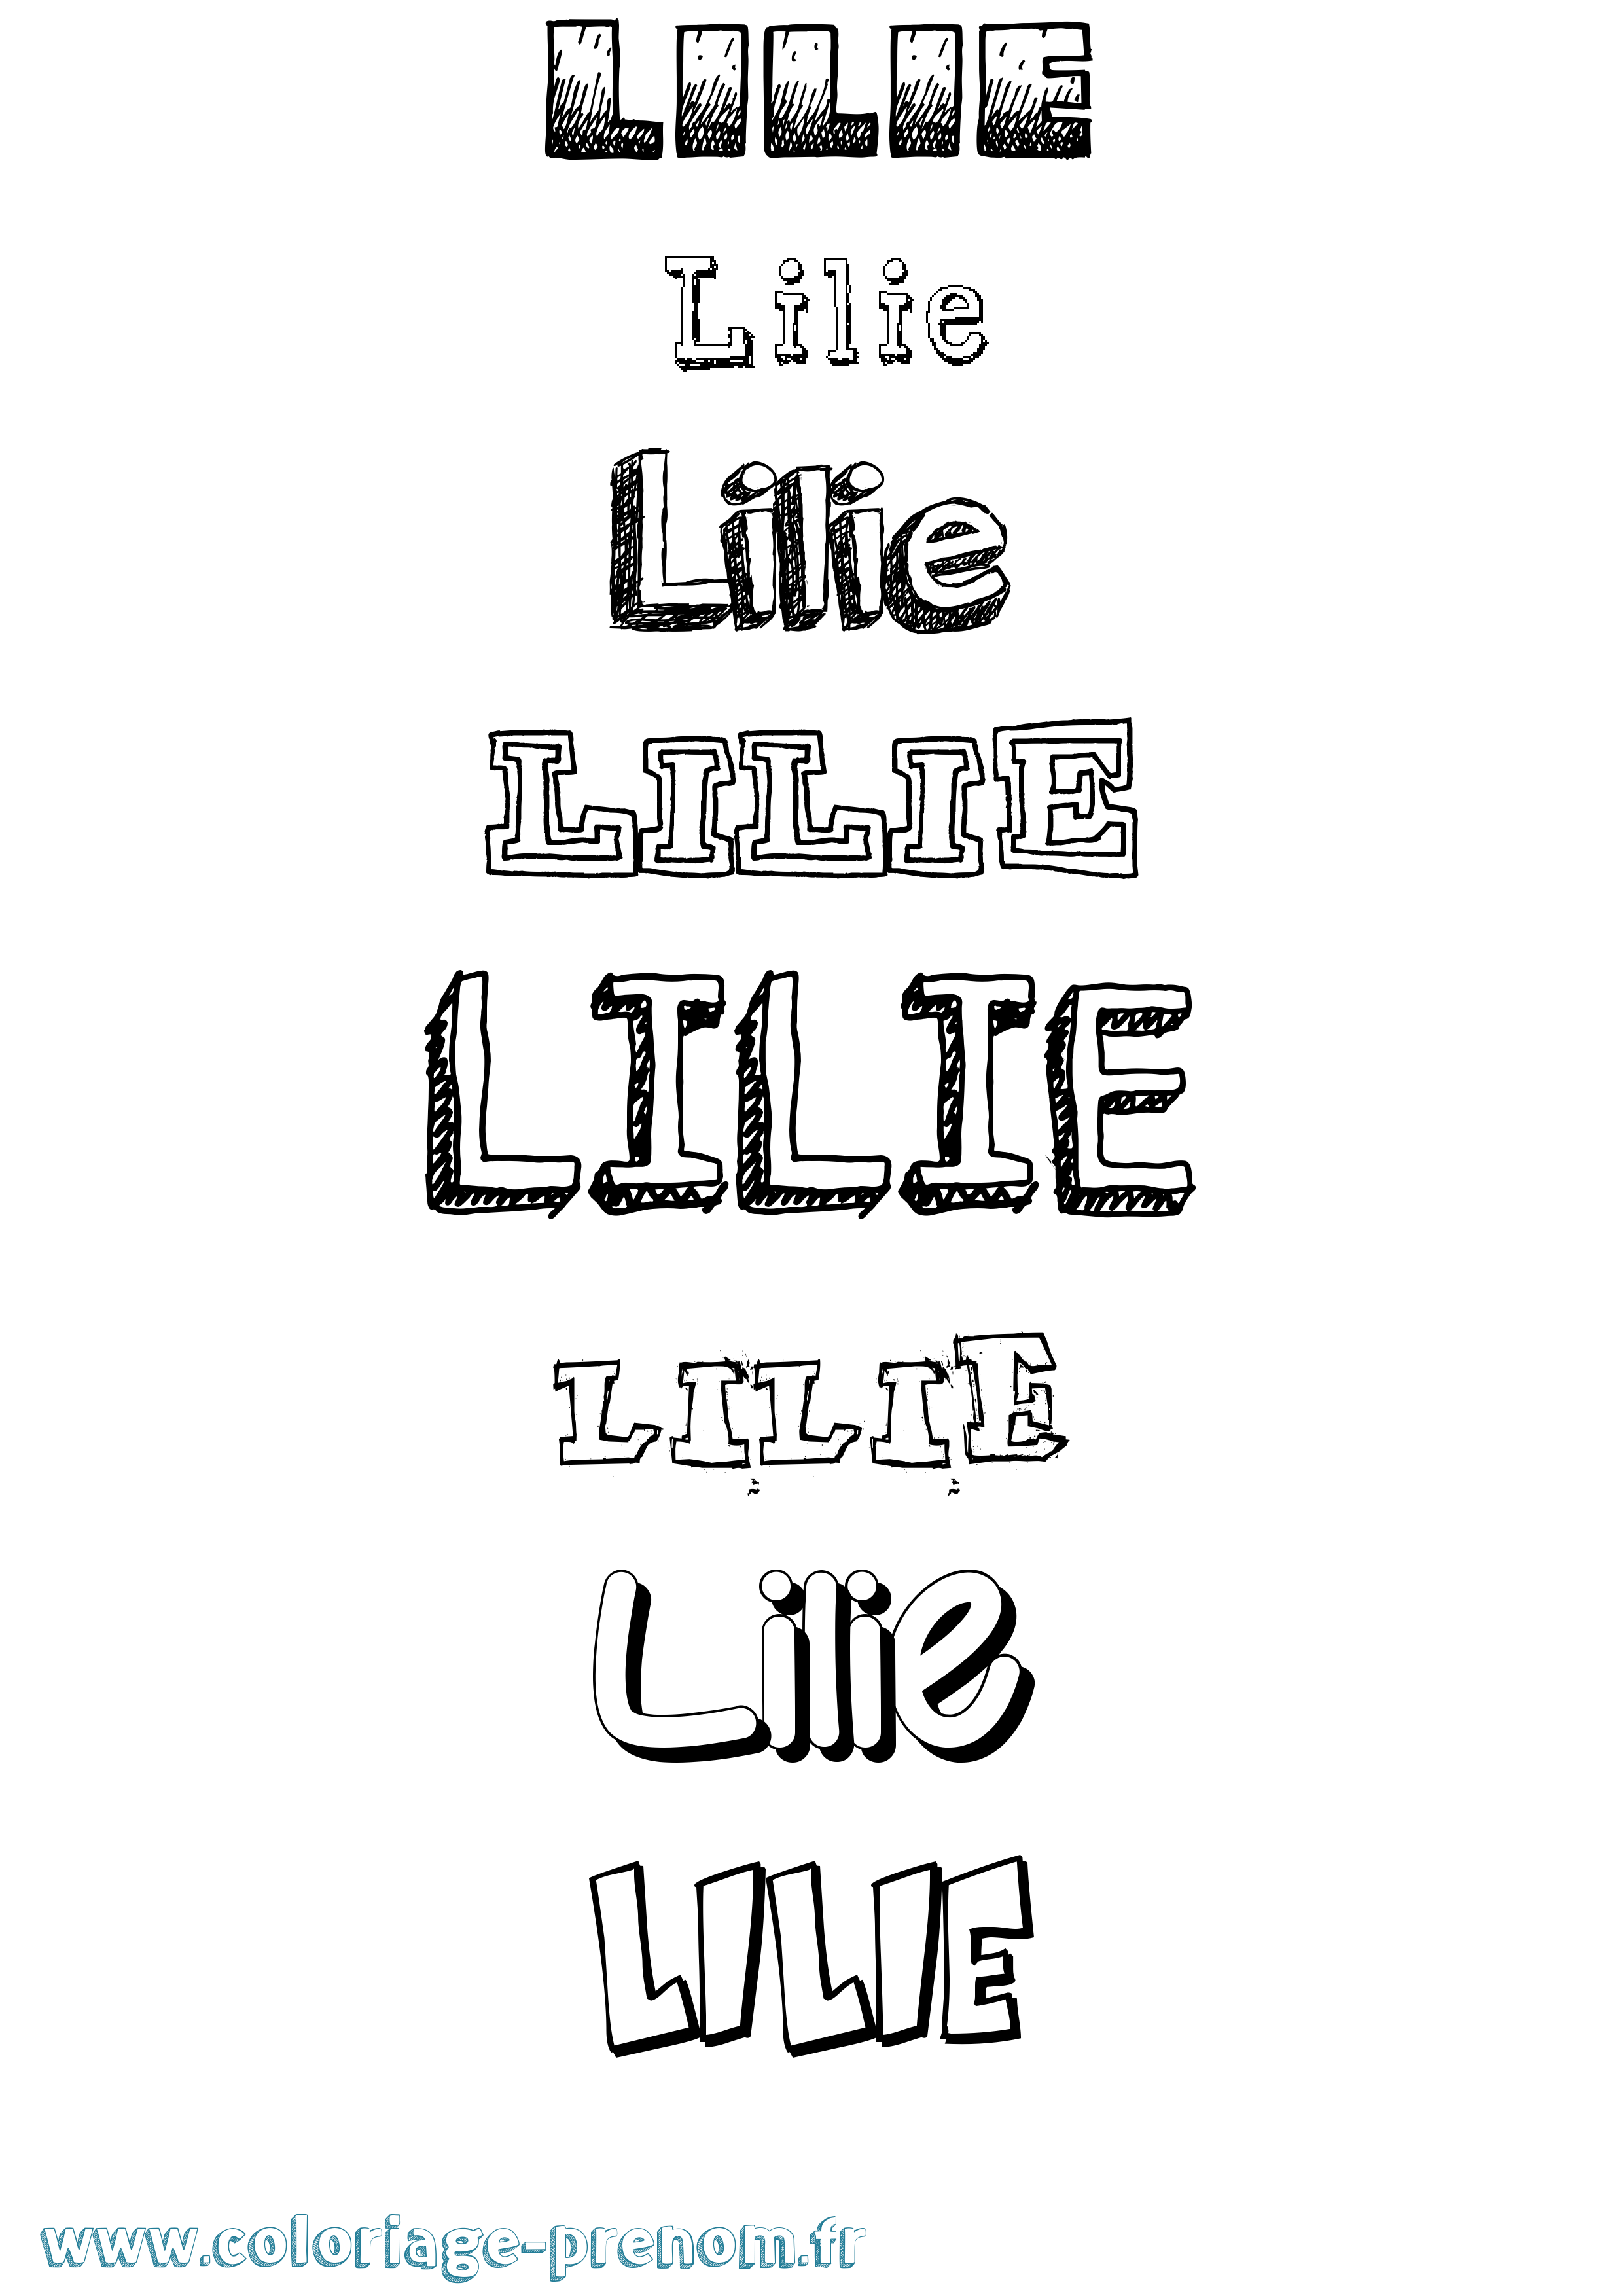 Coloriage prénom Lilie